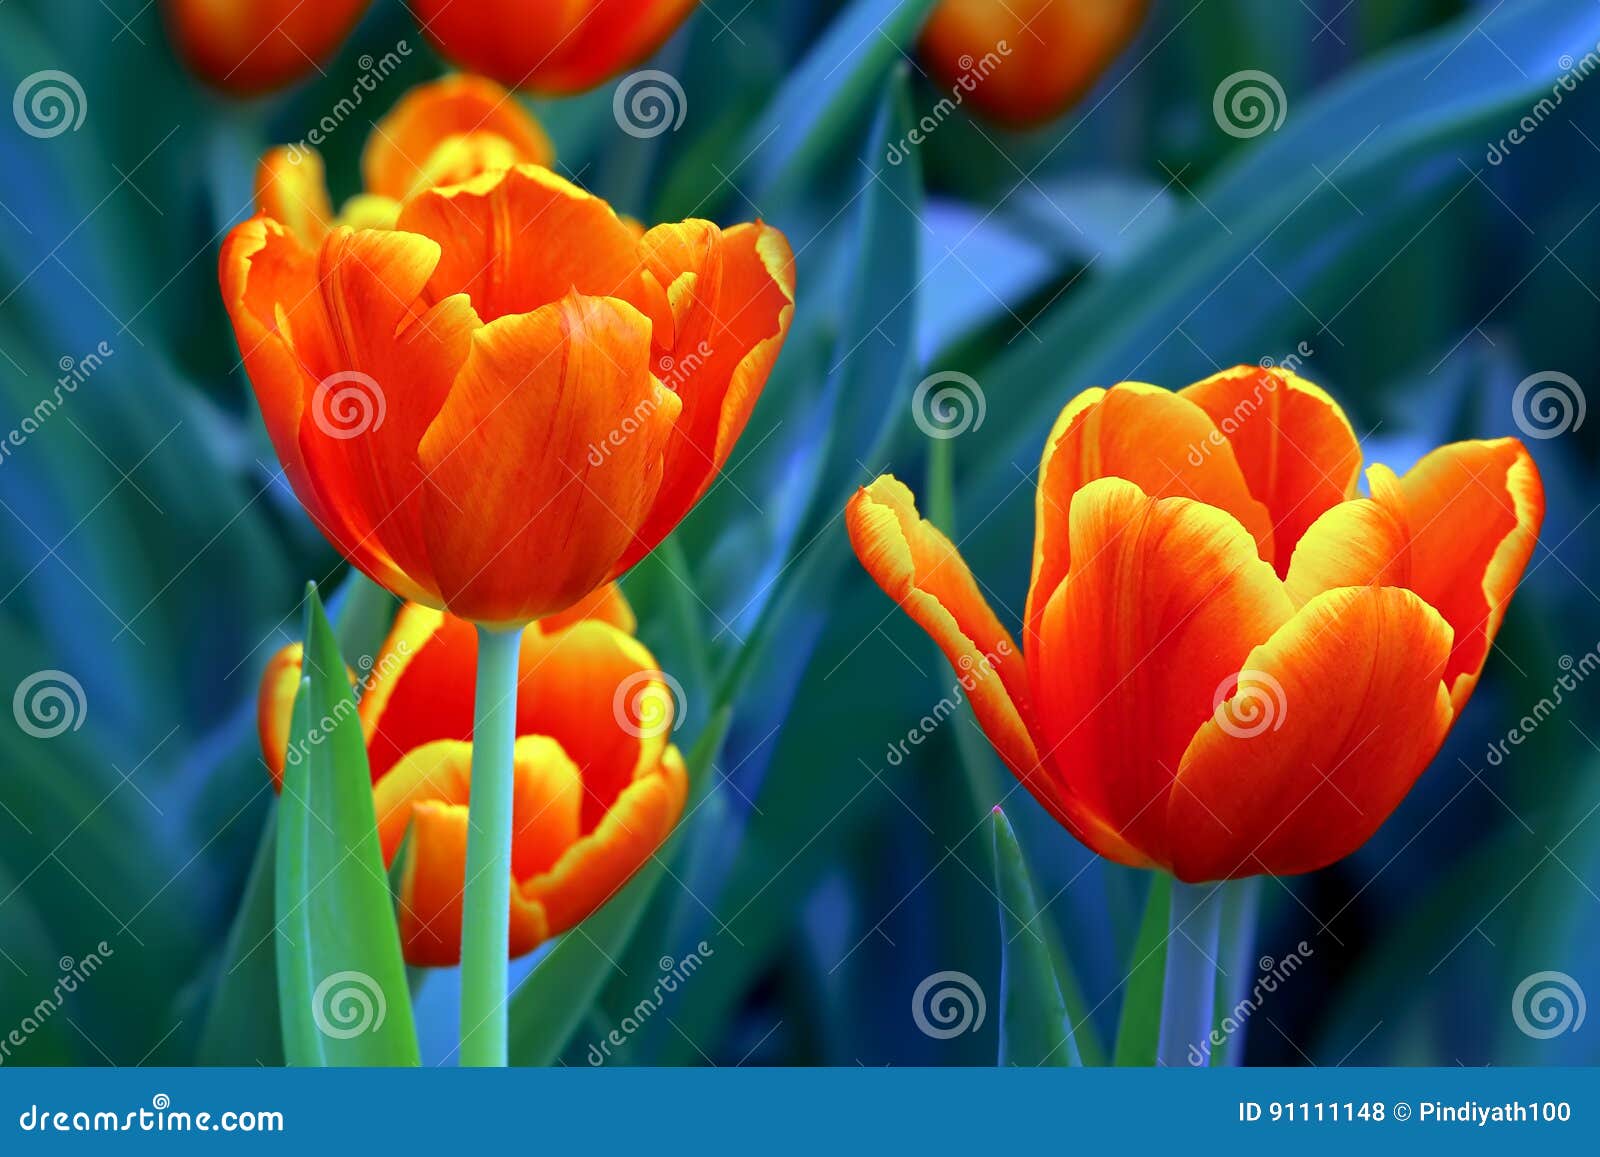 elegant yellow tipped orange tulips